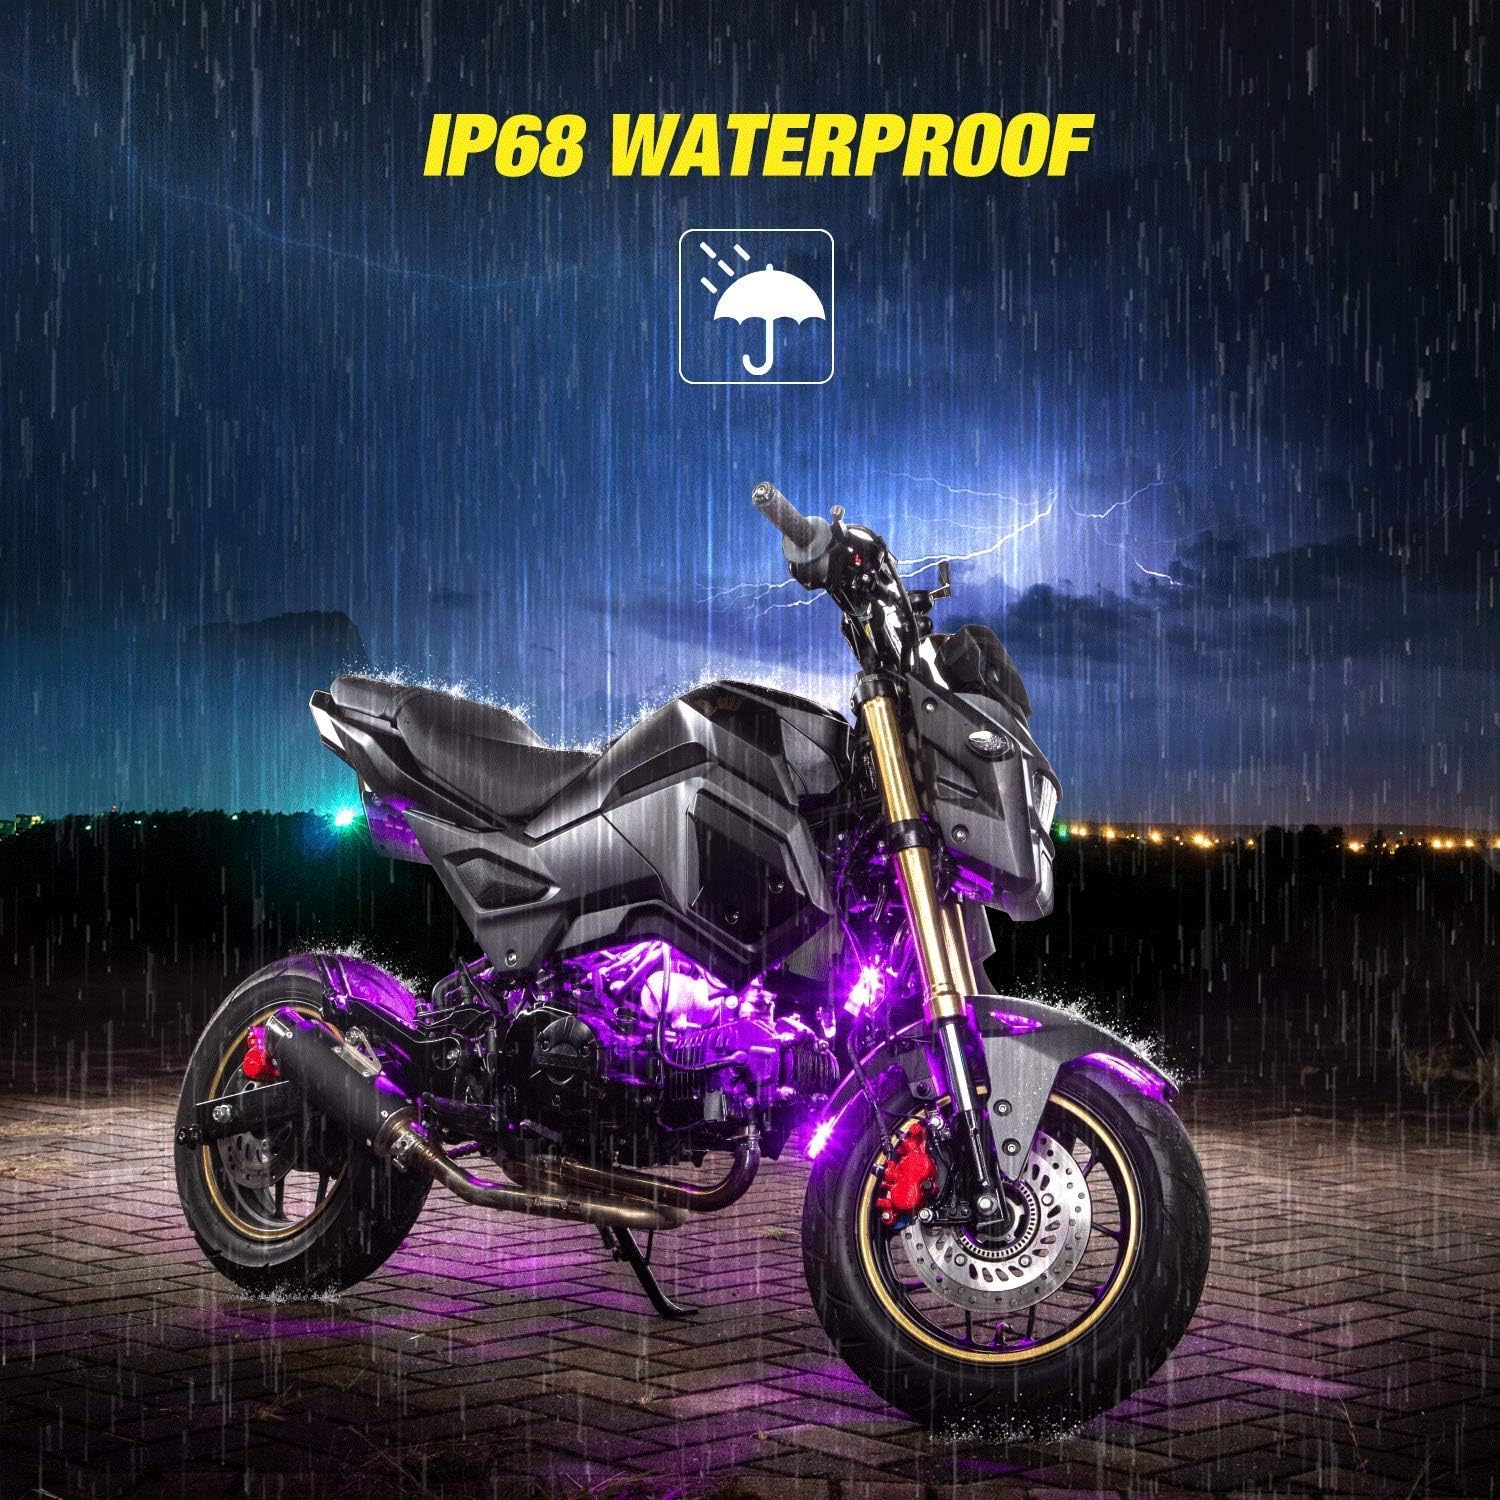 12PC Motorcycle RGB Led Light Kit with Brake Light Function